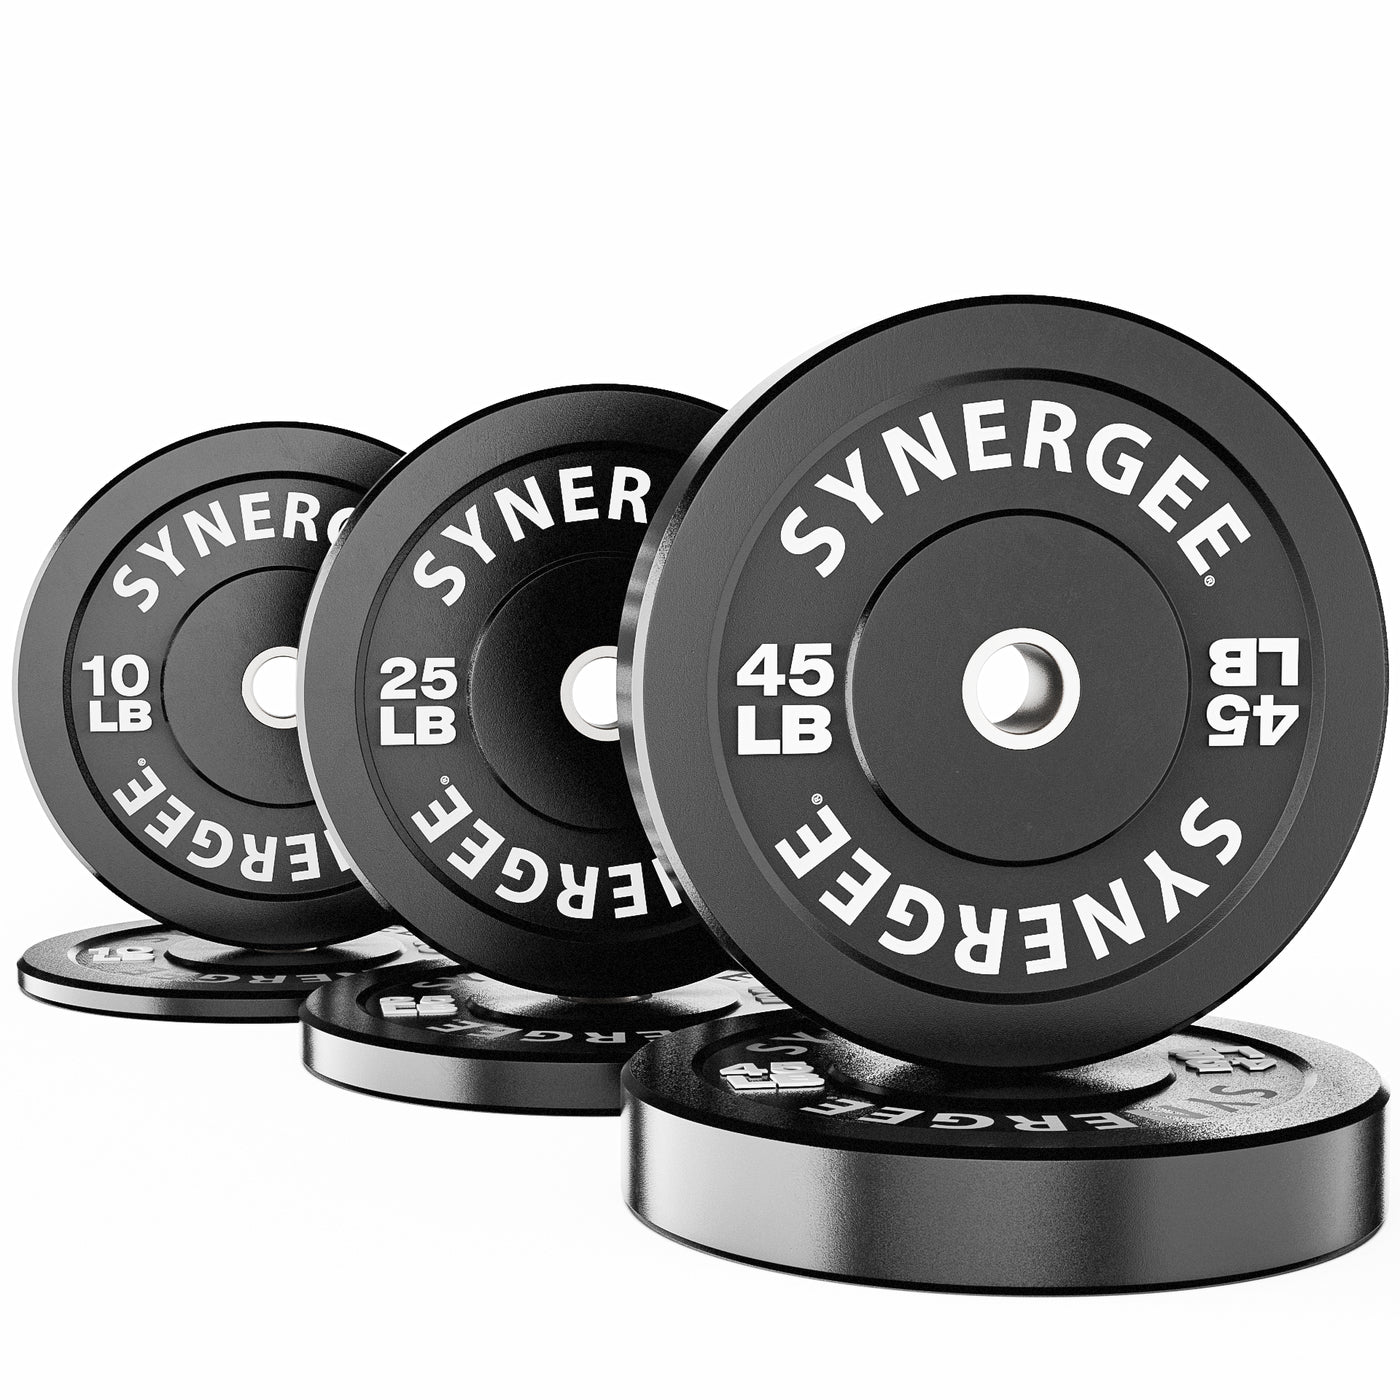 Synergee Bumper Plates - 160lb Set